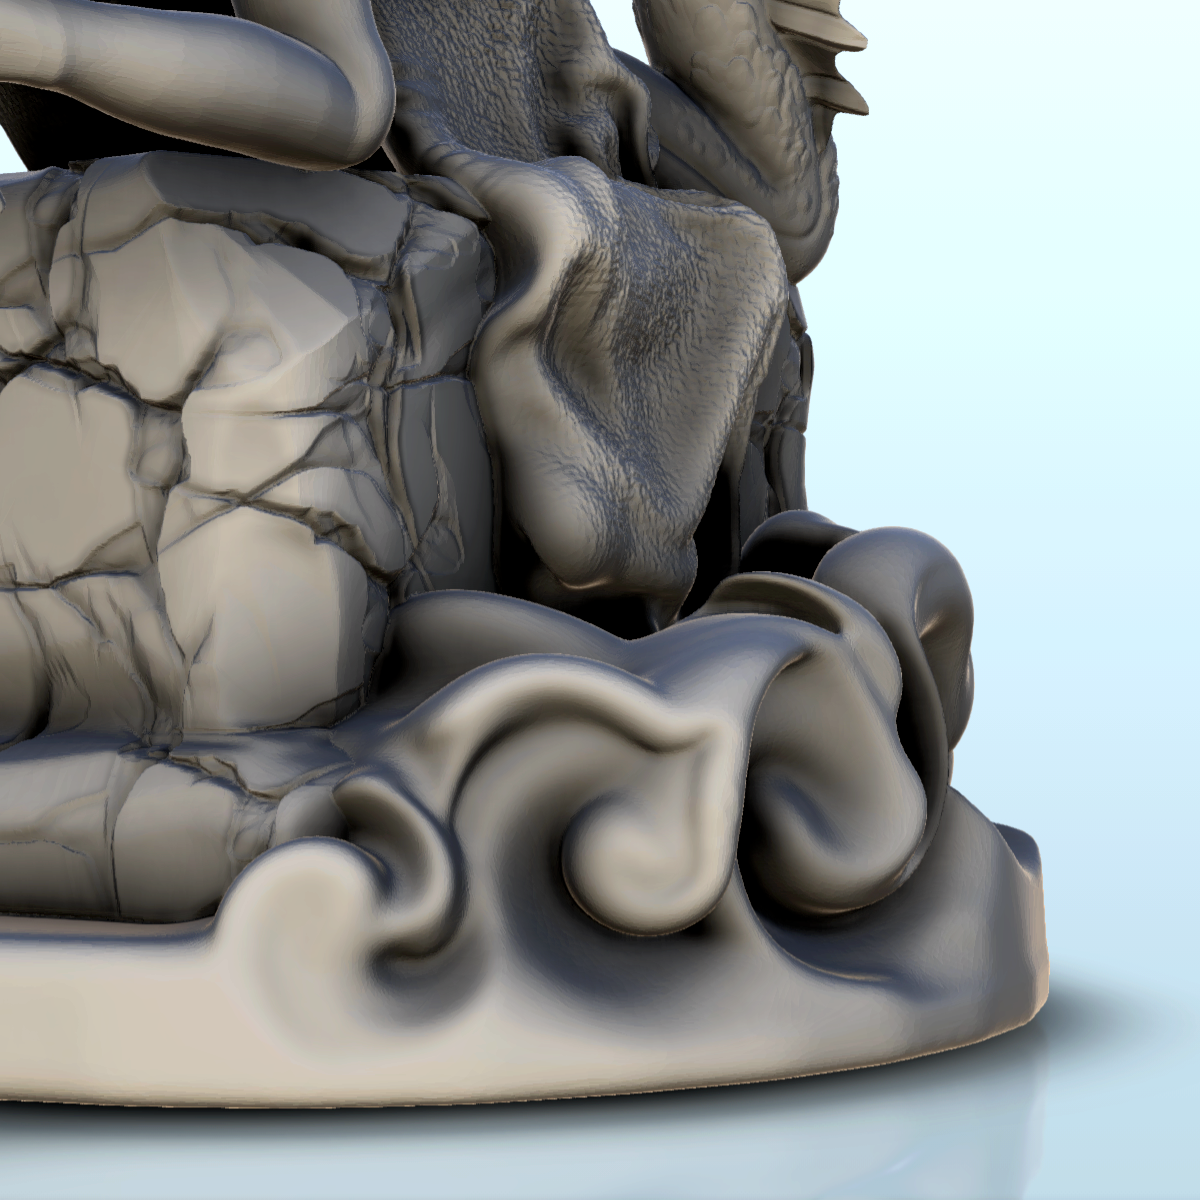 Gorgon mermaid and dice | 3D Print Model